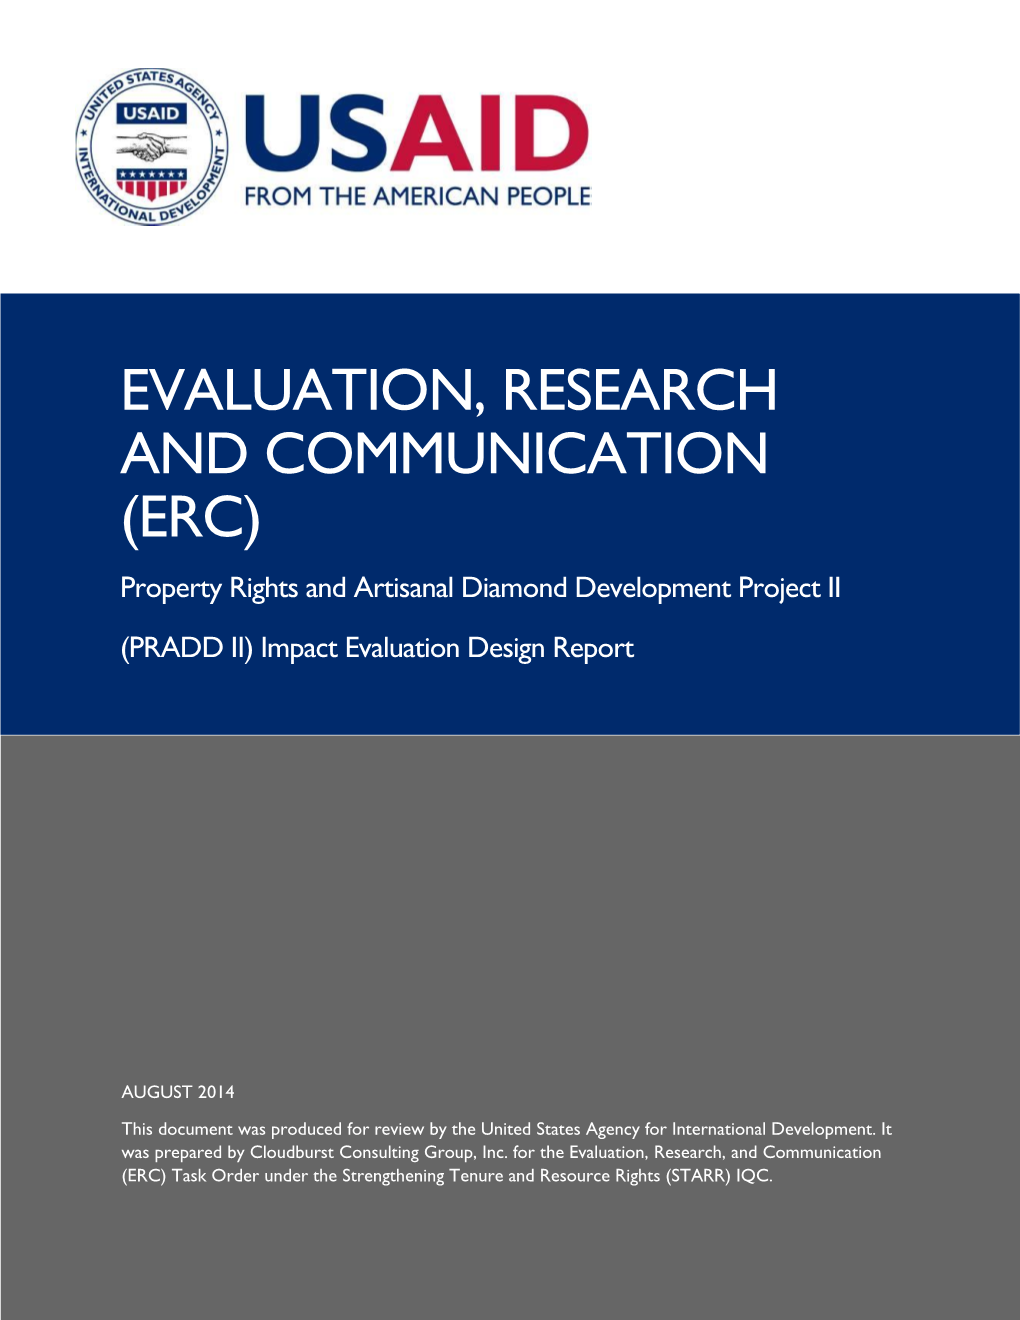 PRADD II Guinea Impact Evaluation Design Report